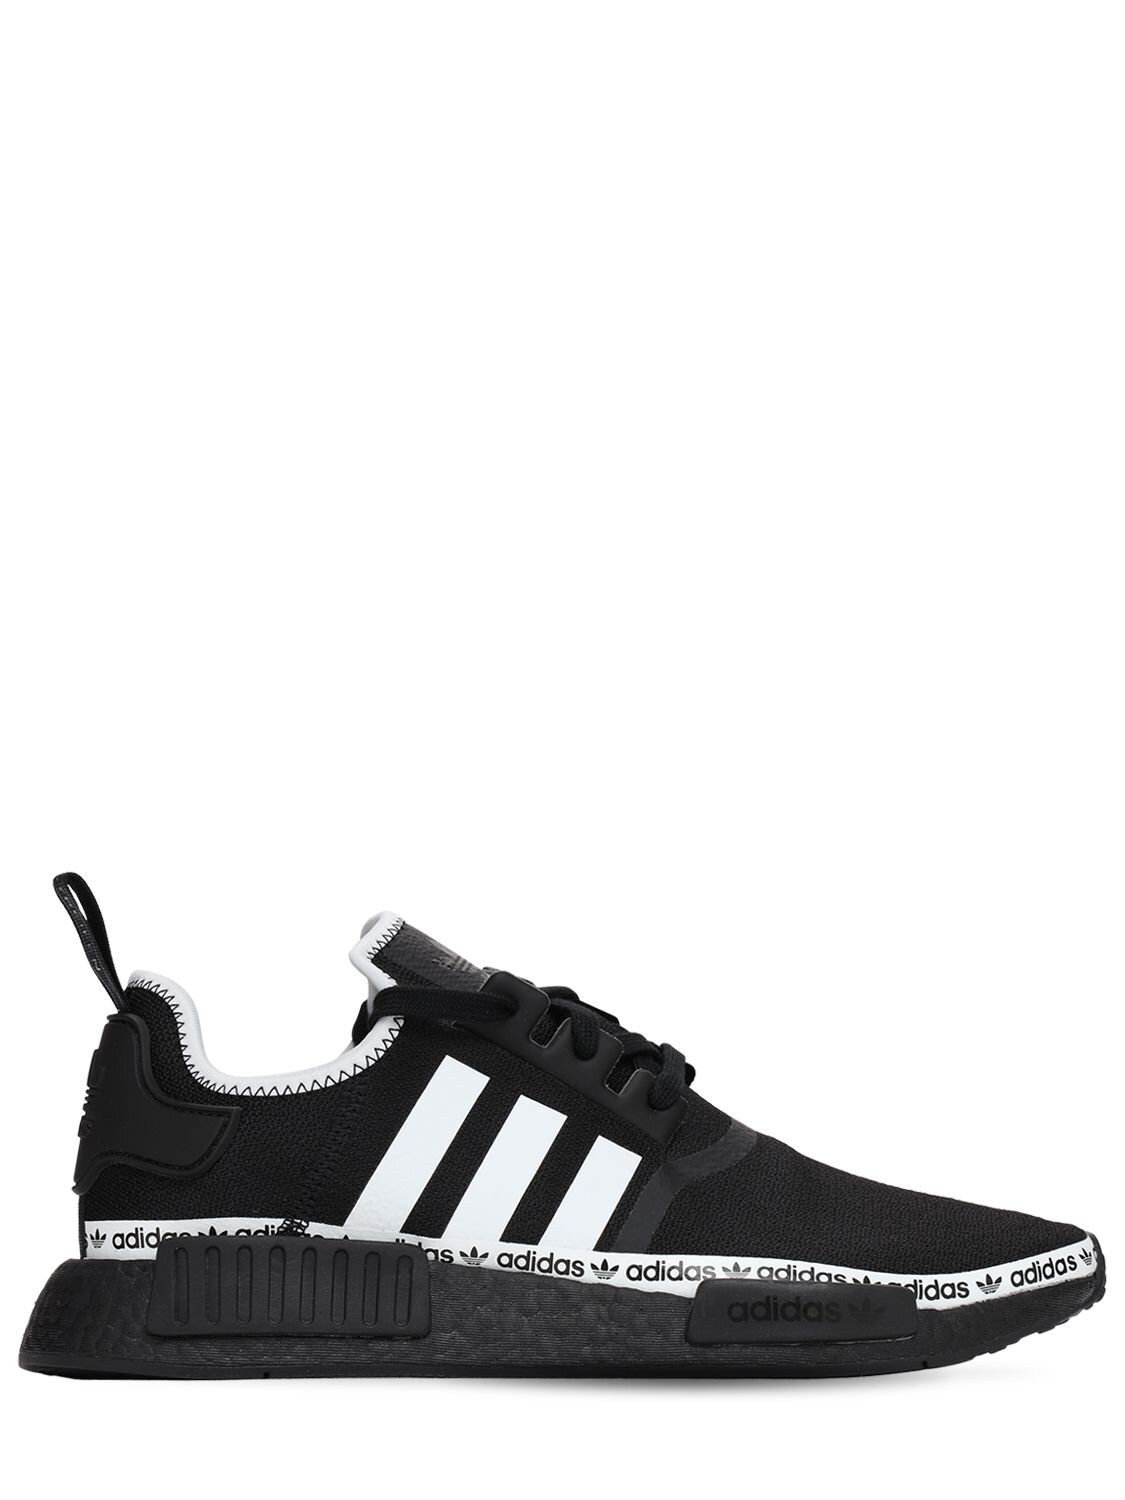 Adidas Originals Nmd_r1 Sneakers In Black,white